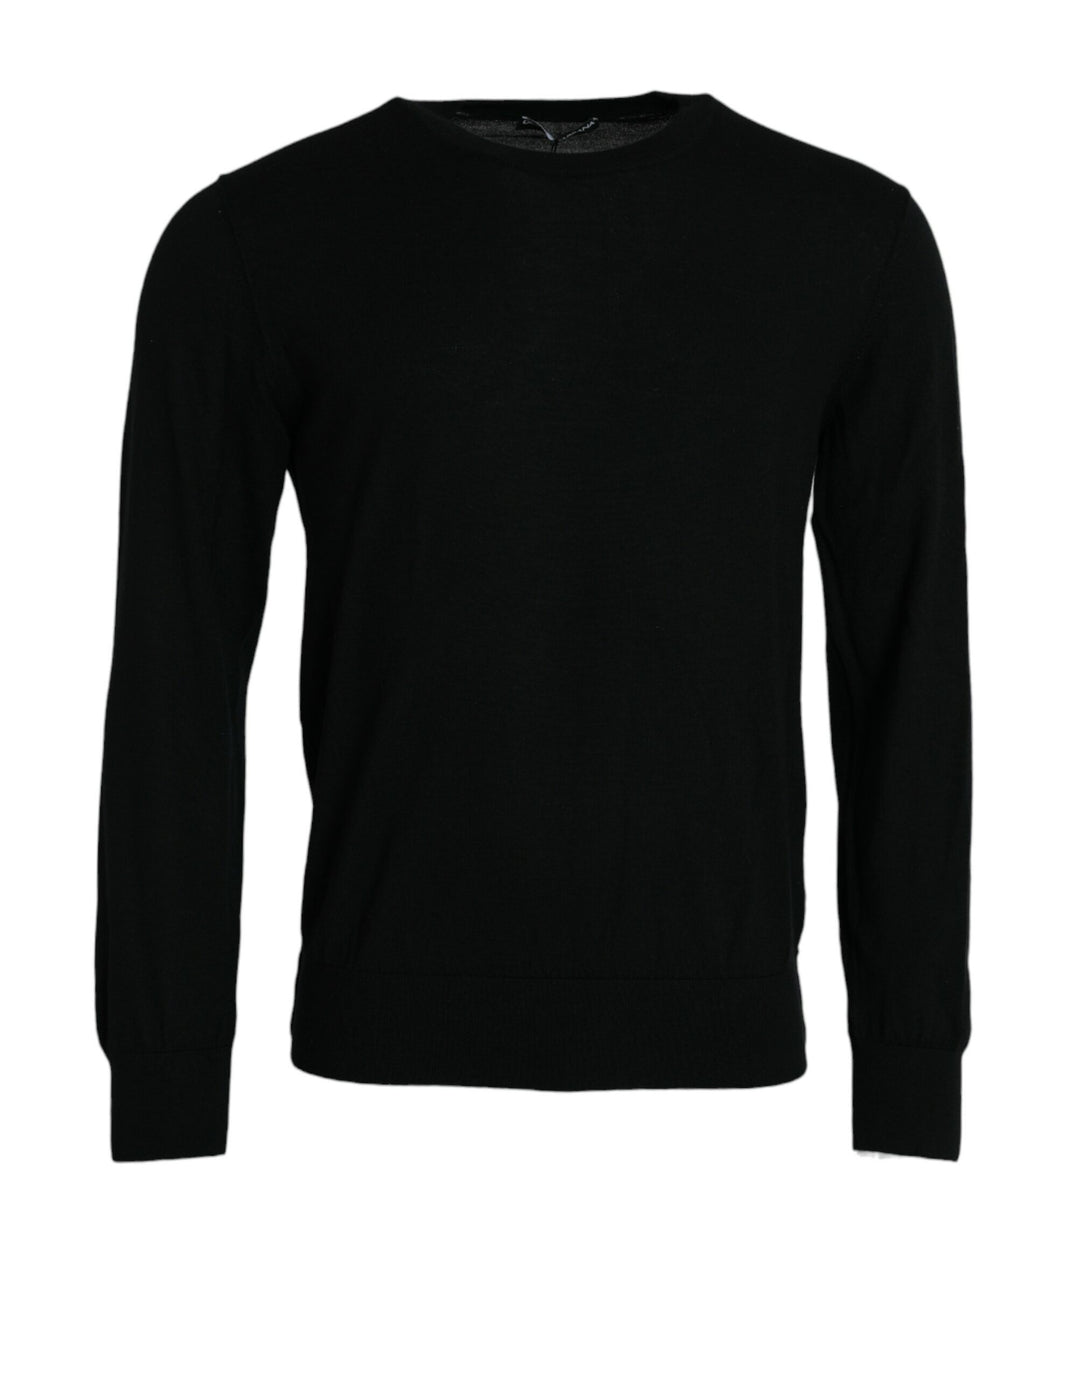 Dolce & Gabbana  Black Cashmere Crew Neck Pullover Sweater